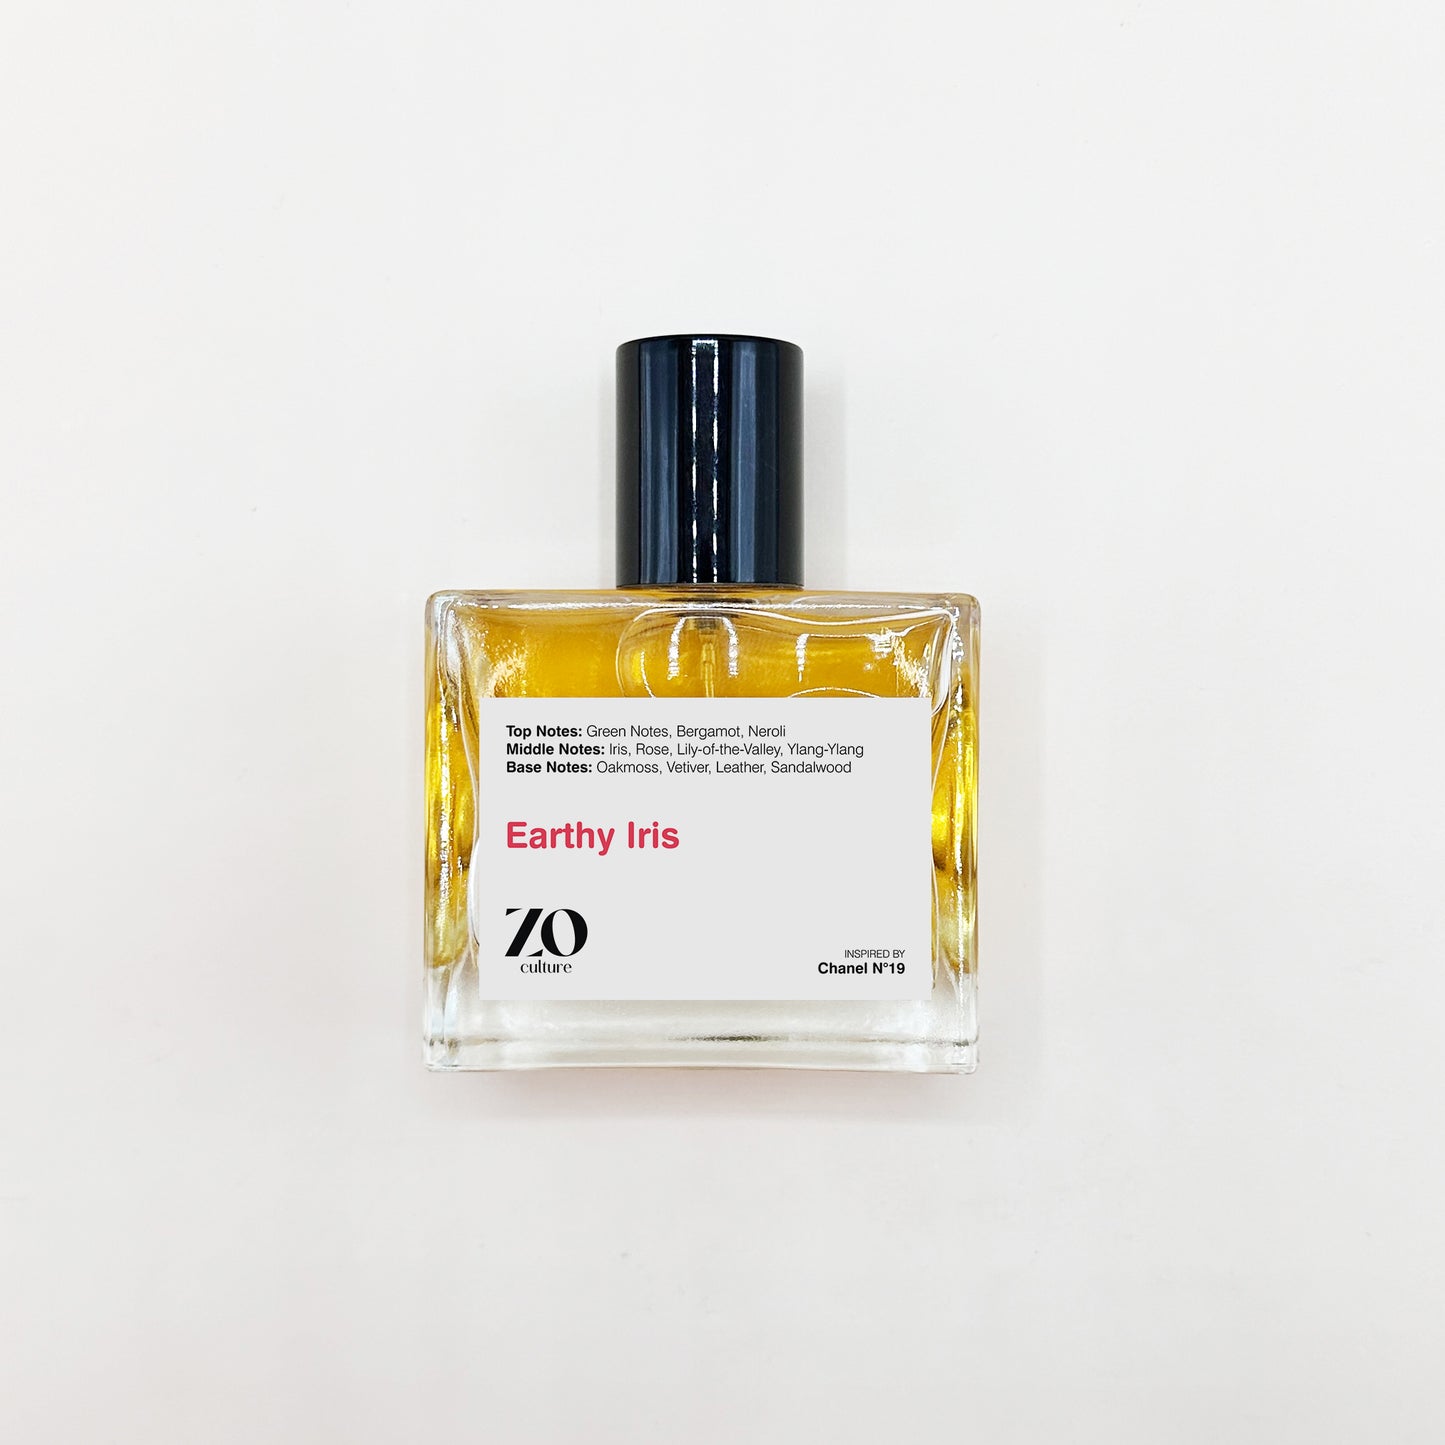 Women Perfume Earthy Iris - Inspired by Chanel N°19 ZoCulture